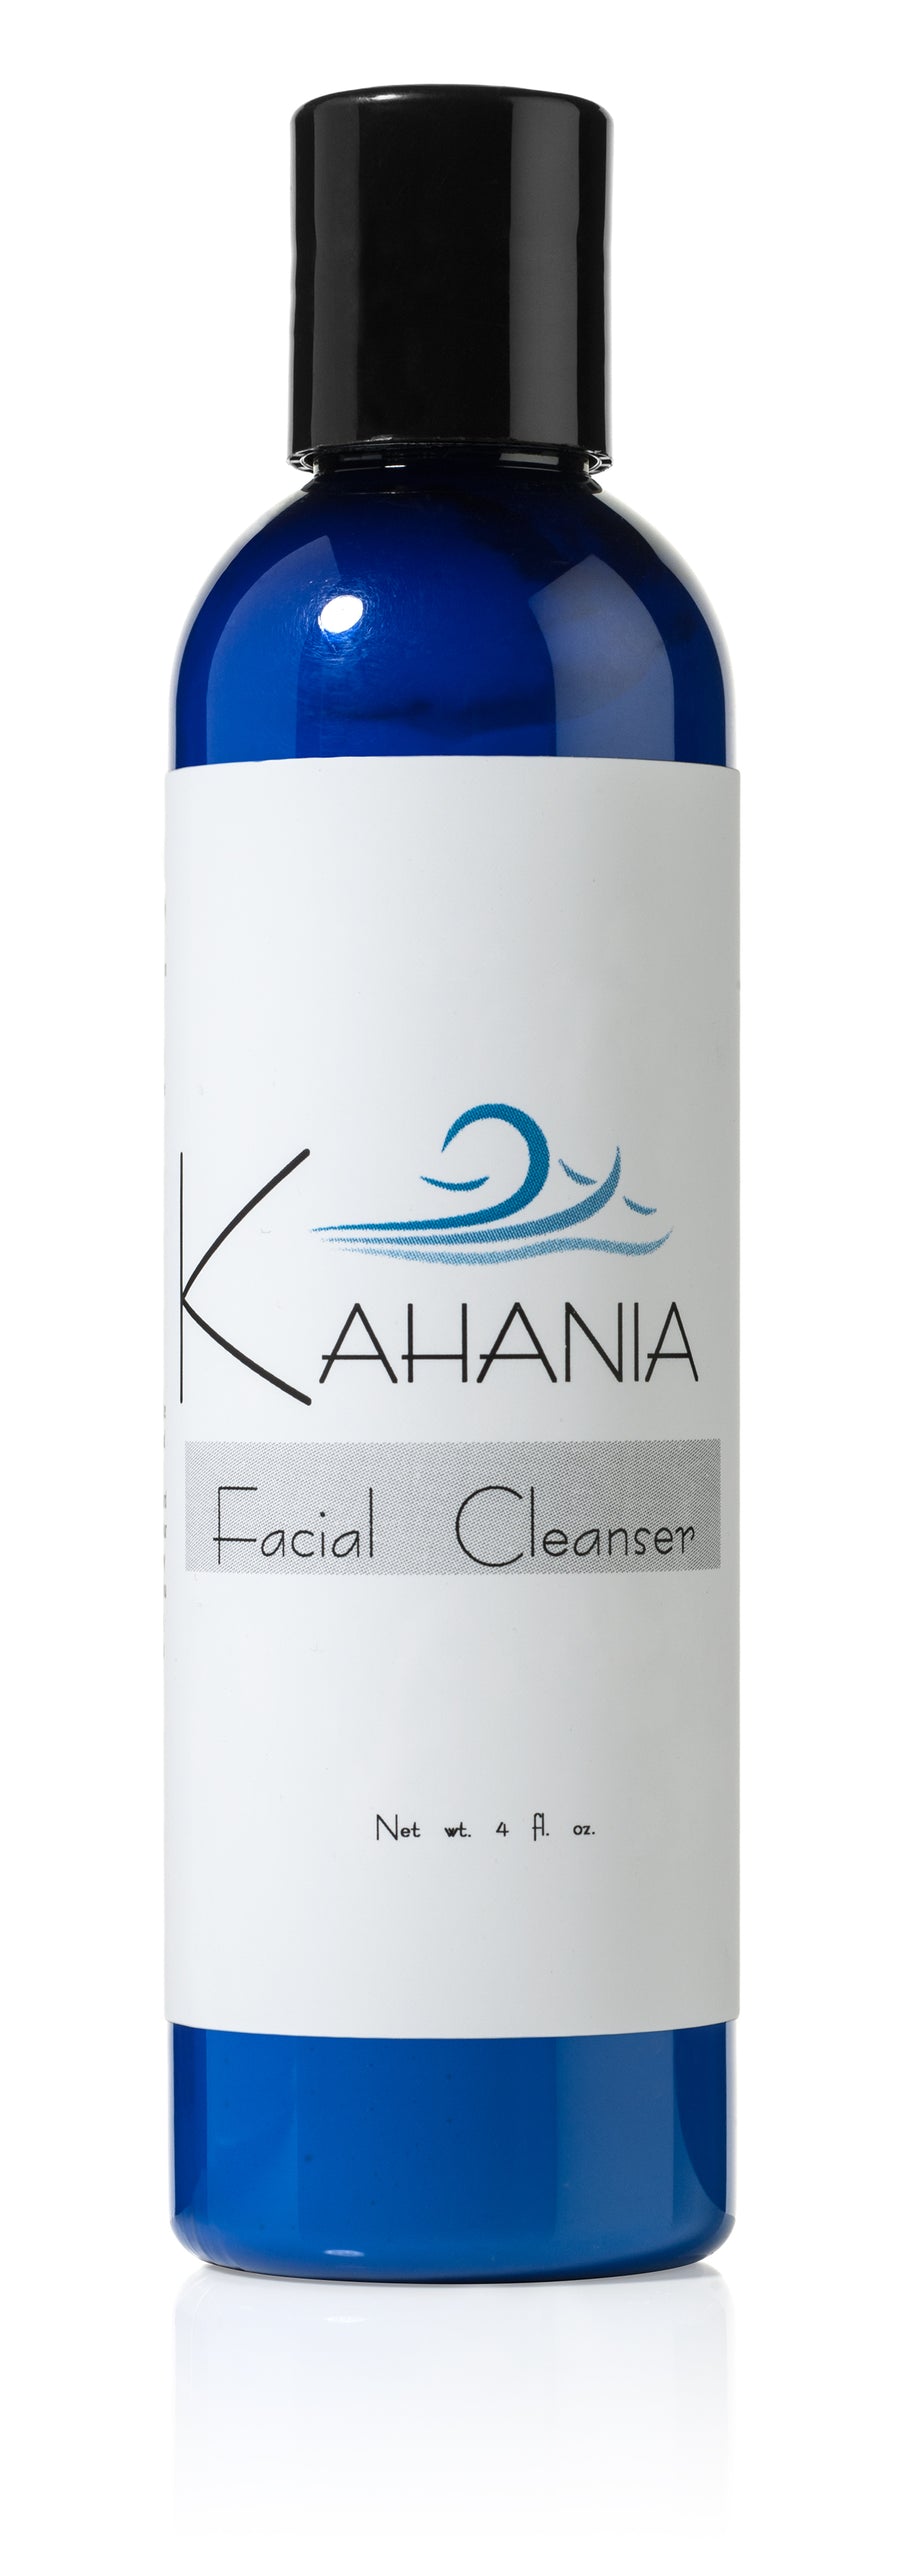 Facial Cleanser - Kahania Natural